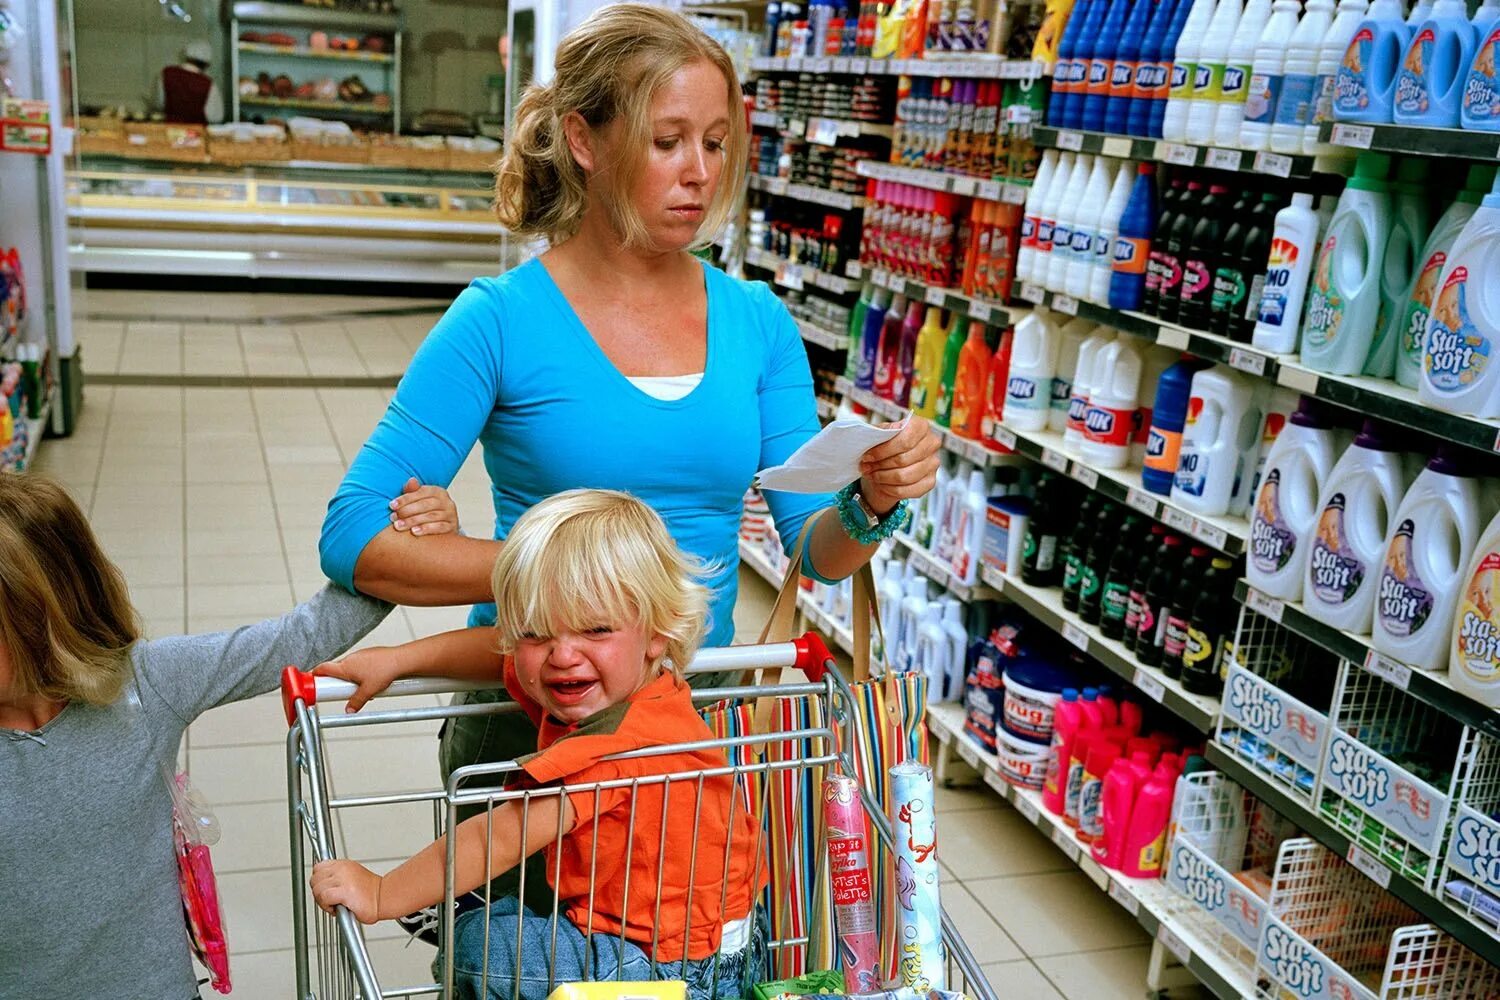 Мама с ребенком в магазине. Ребенок в магазине. Женщина с ребенком в магазине. Ребенок капризничает в магазине.